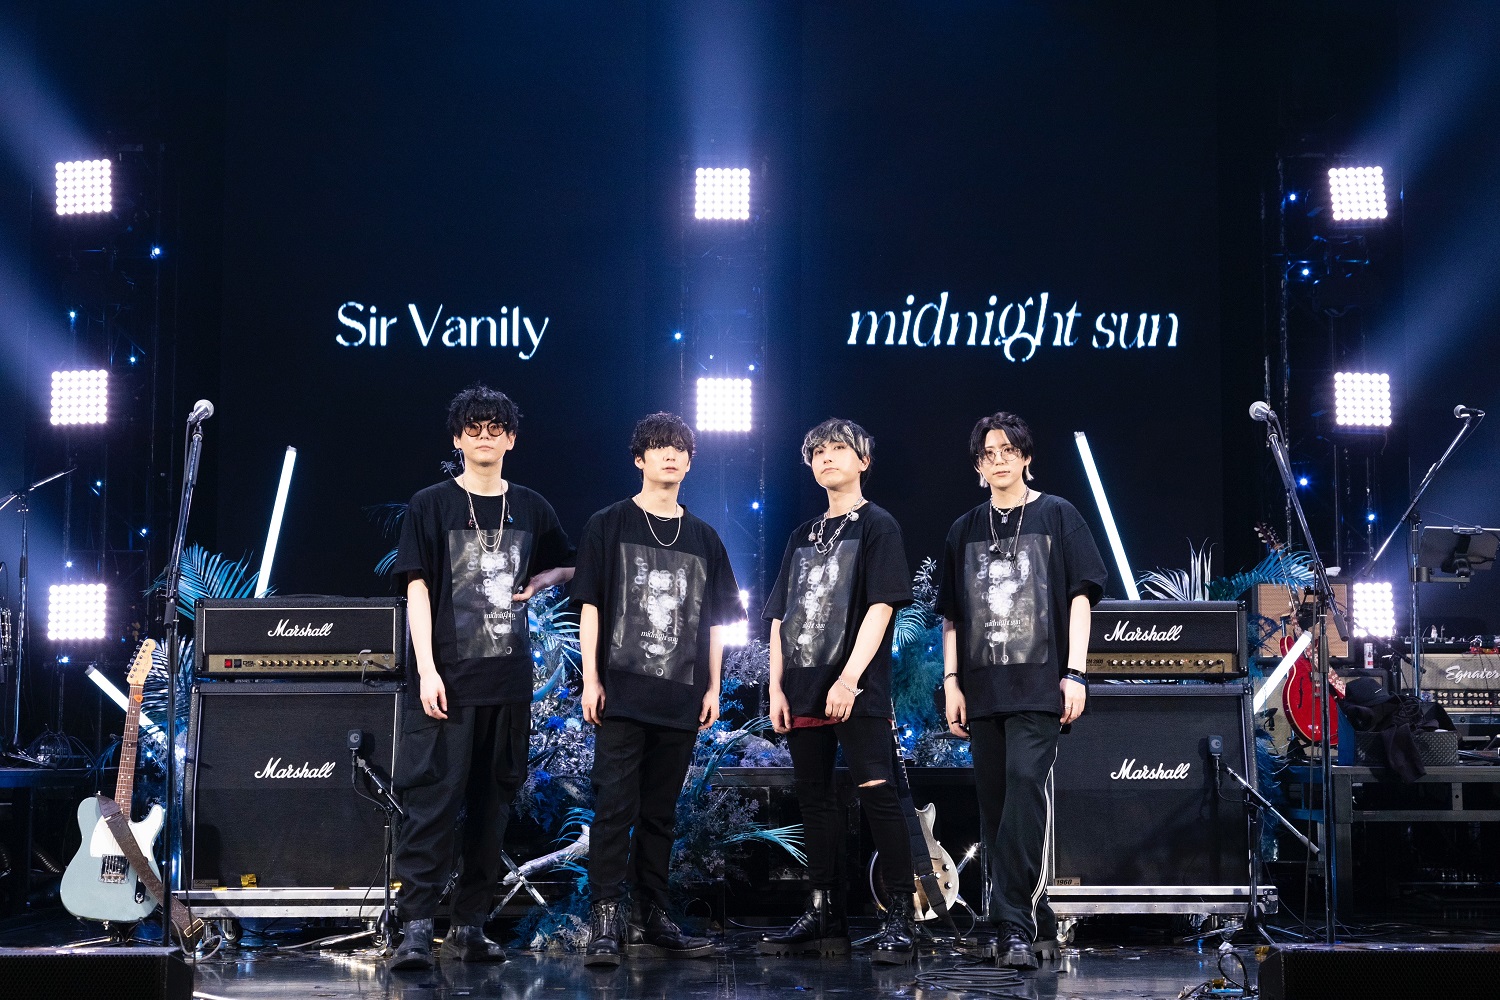 Sir Vanity 2nd Live“midnight sun”ライブレポート